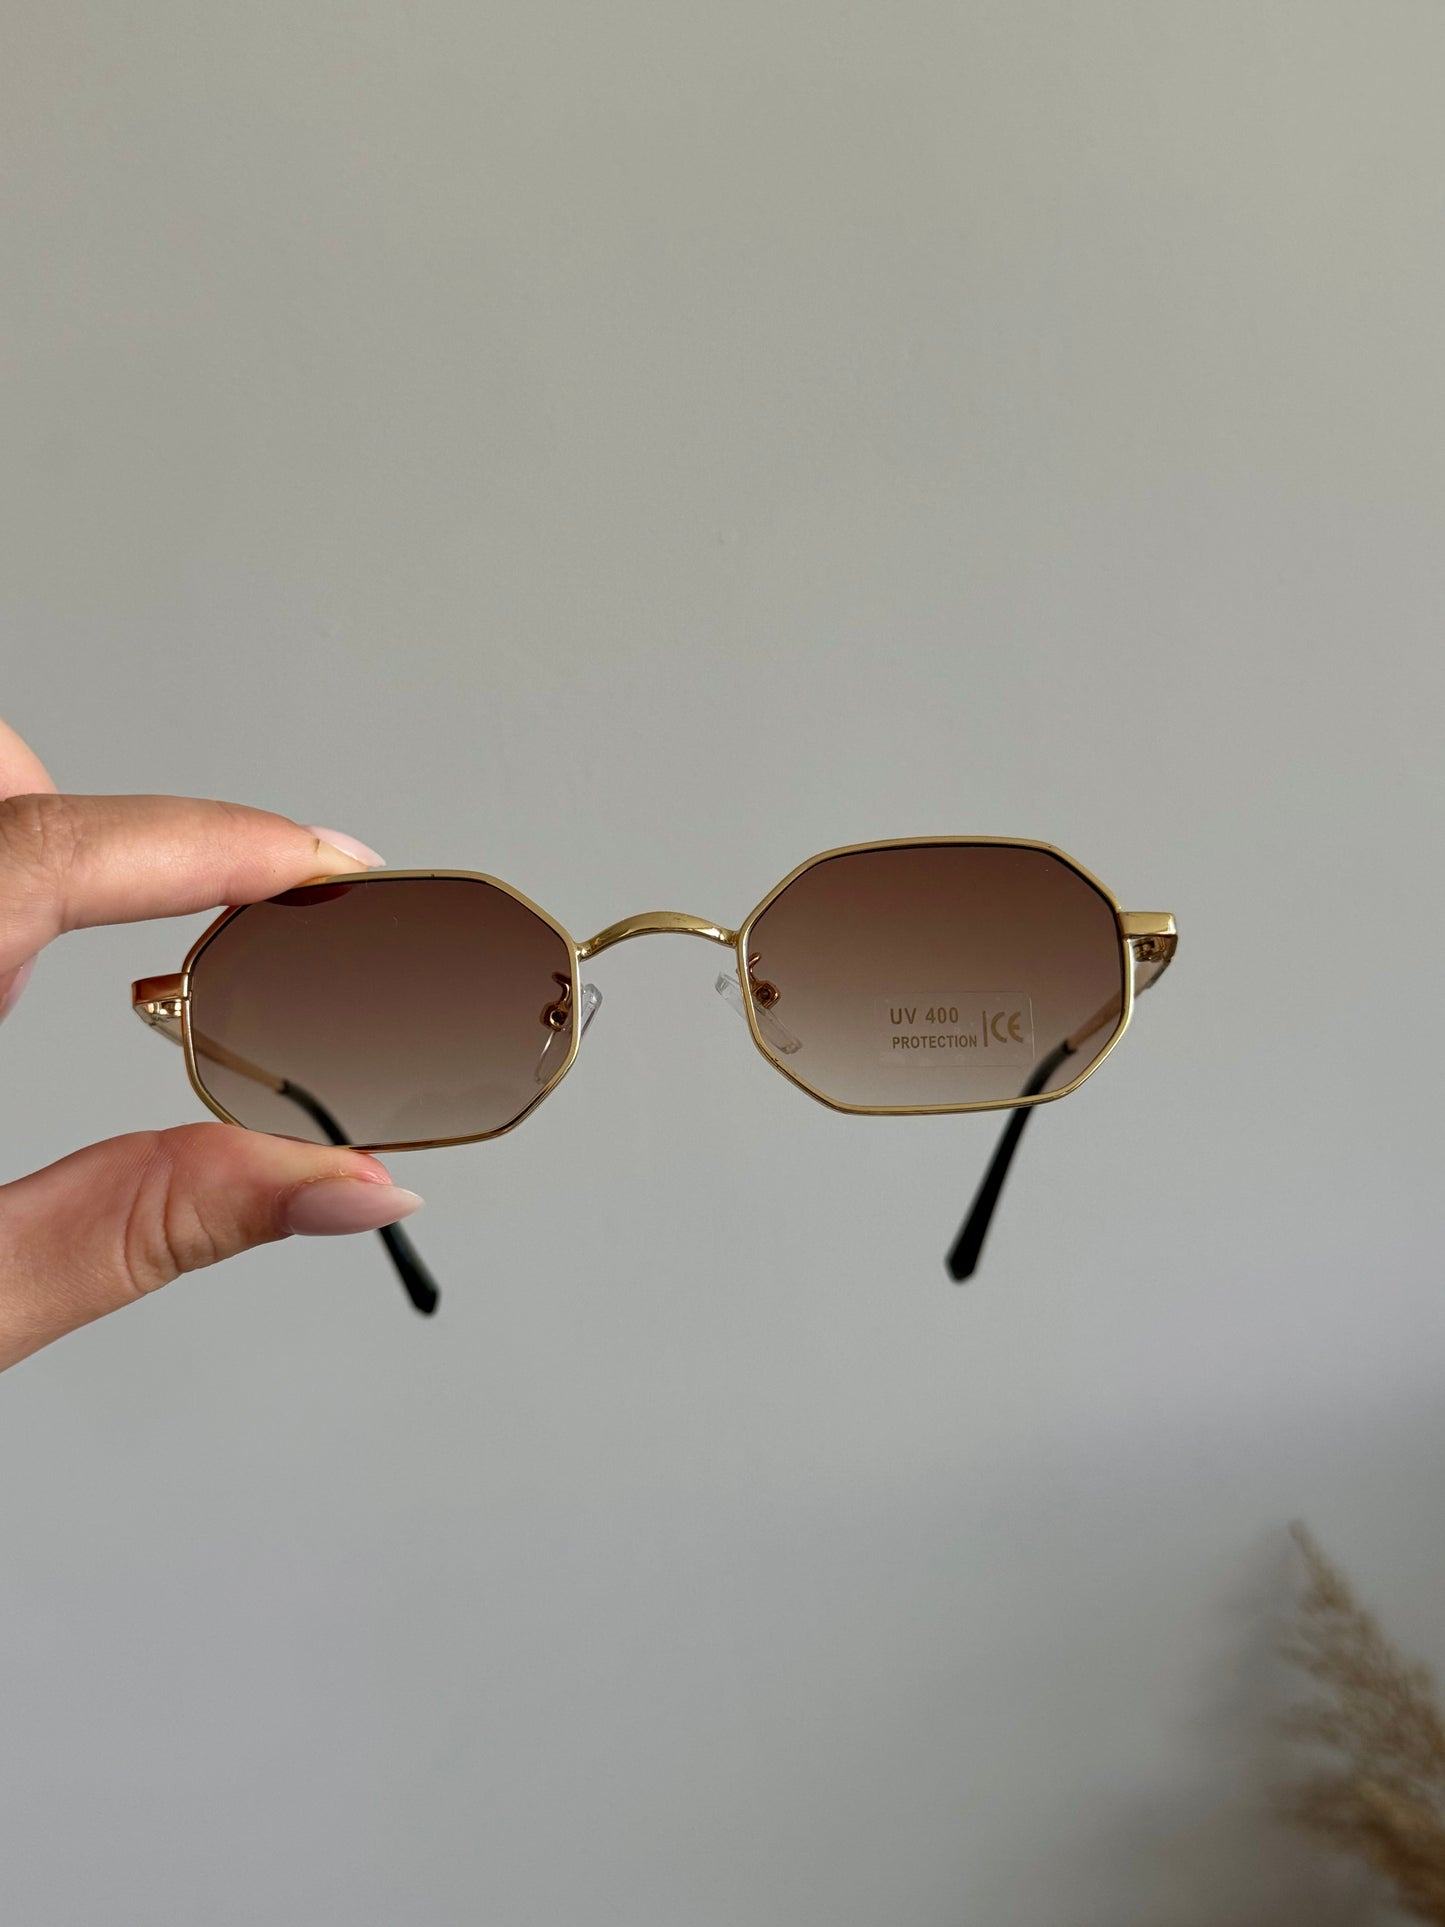 Golden brown sunglasses